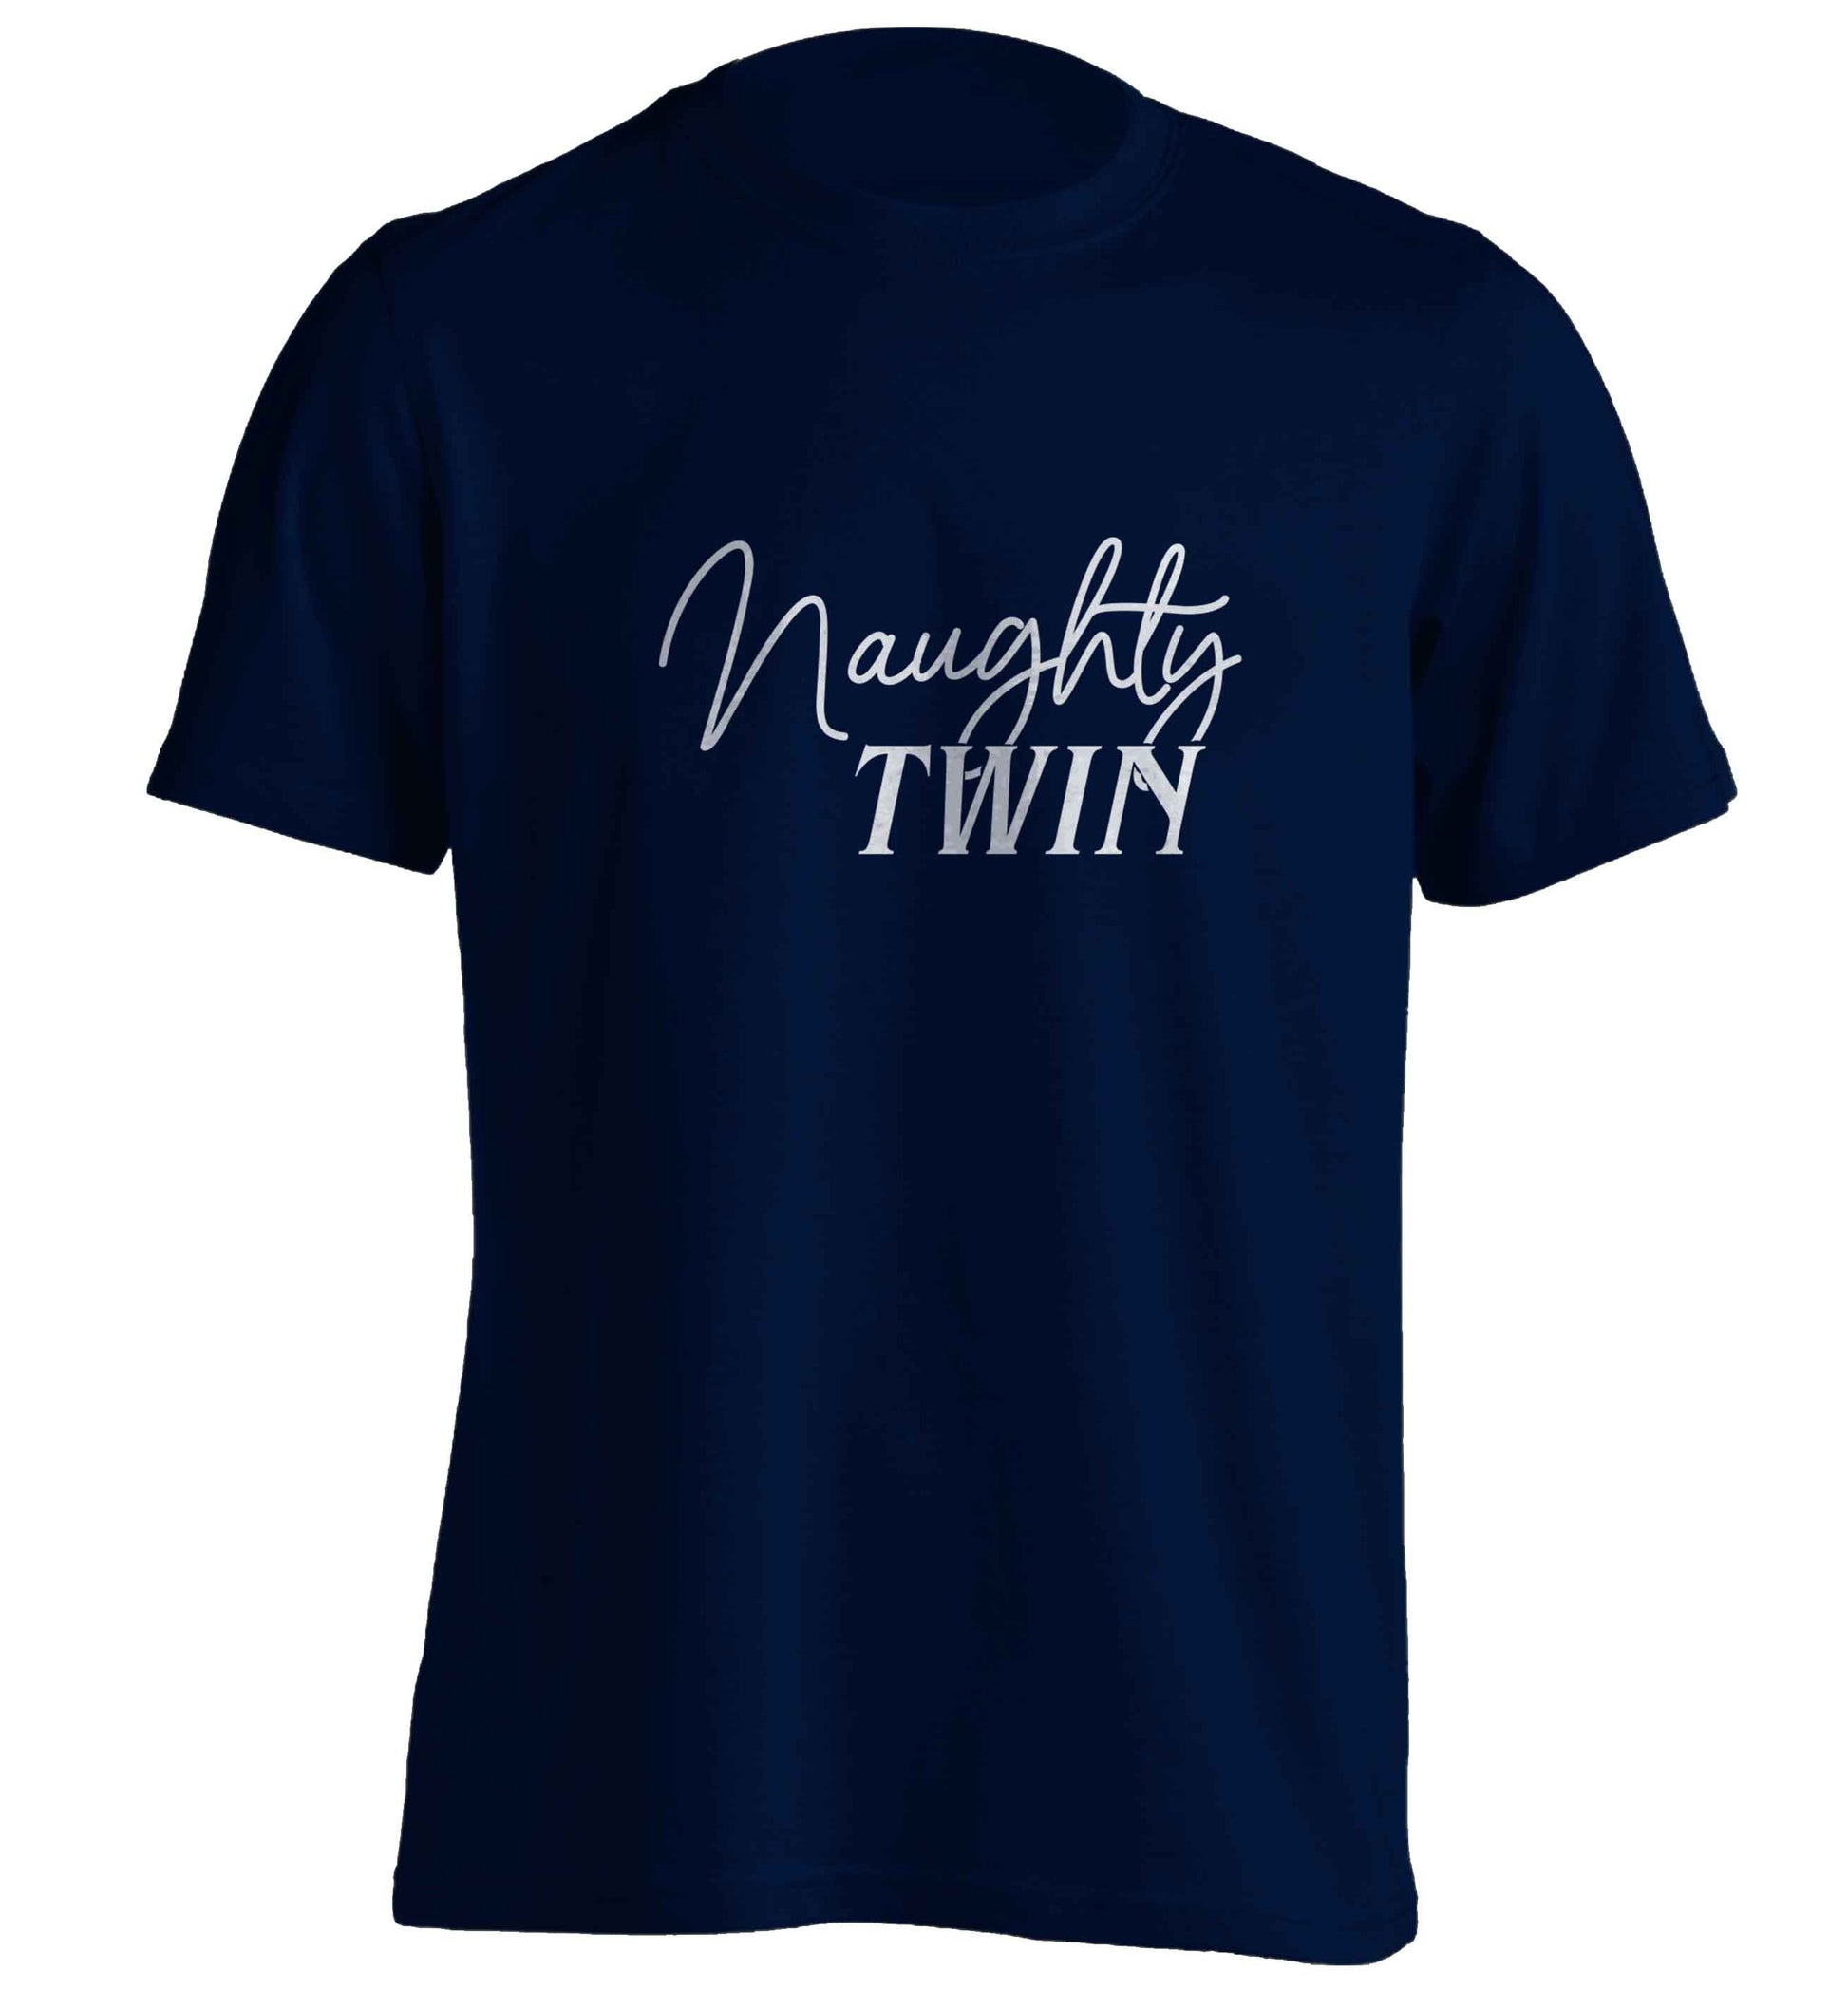 Naughty twin adults unisex navy Tshirt 2XL